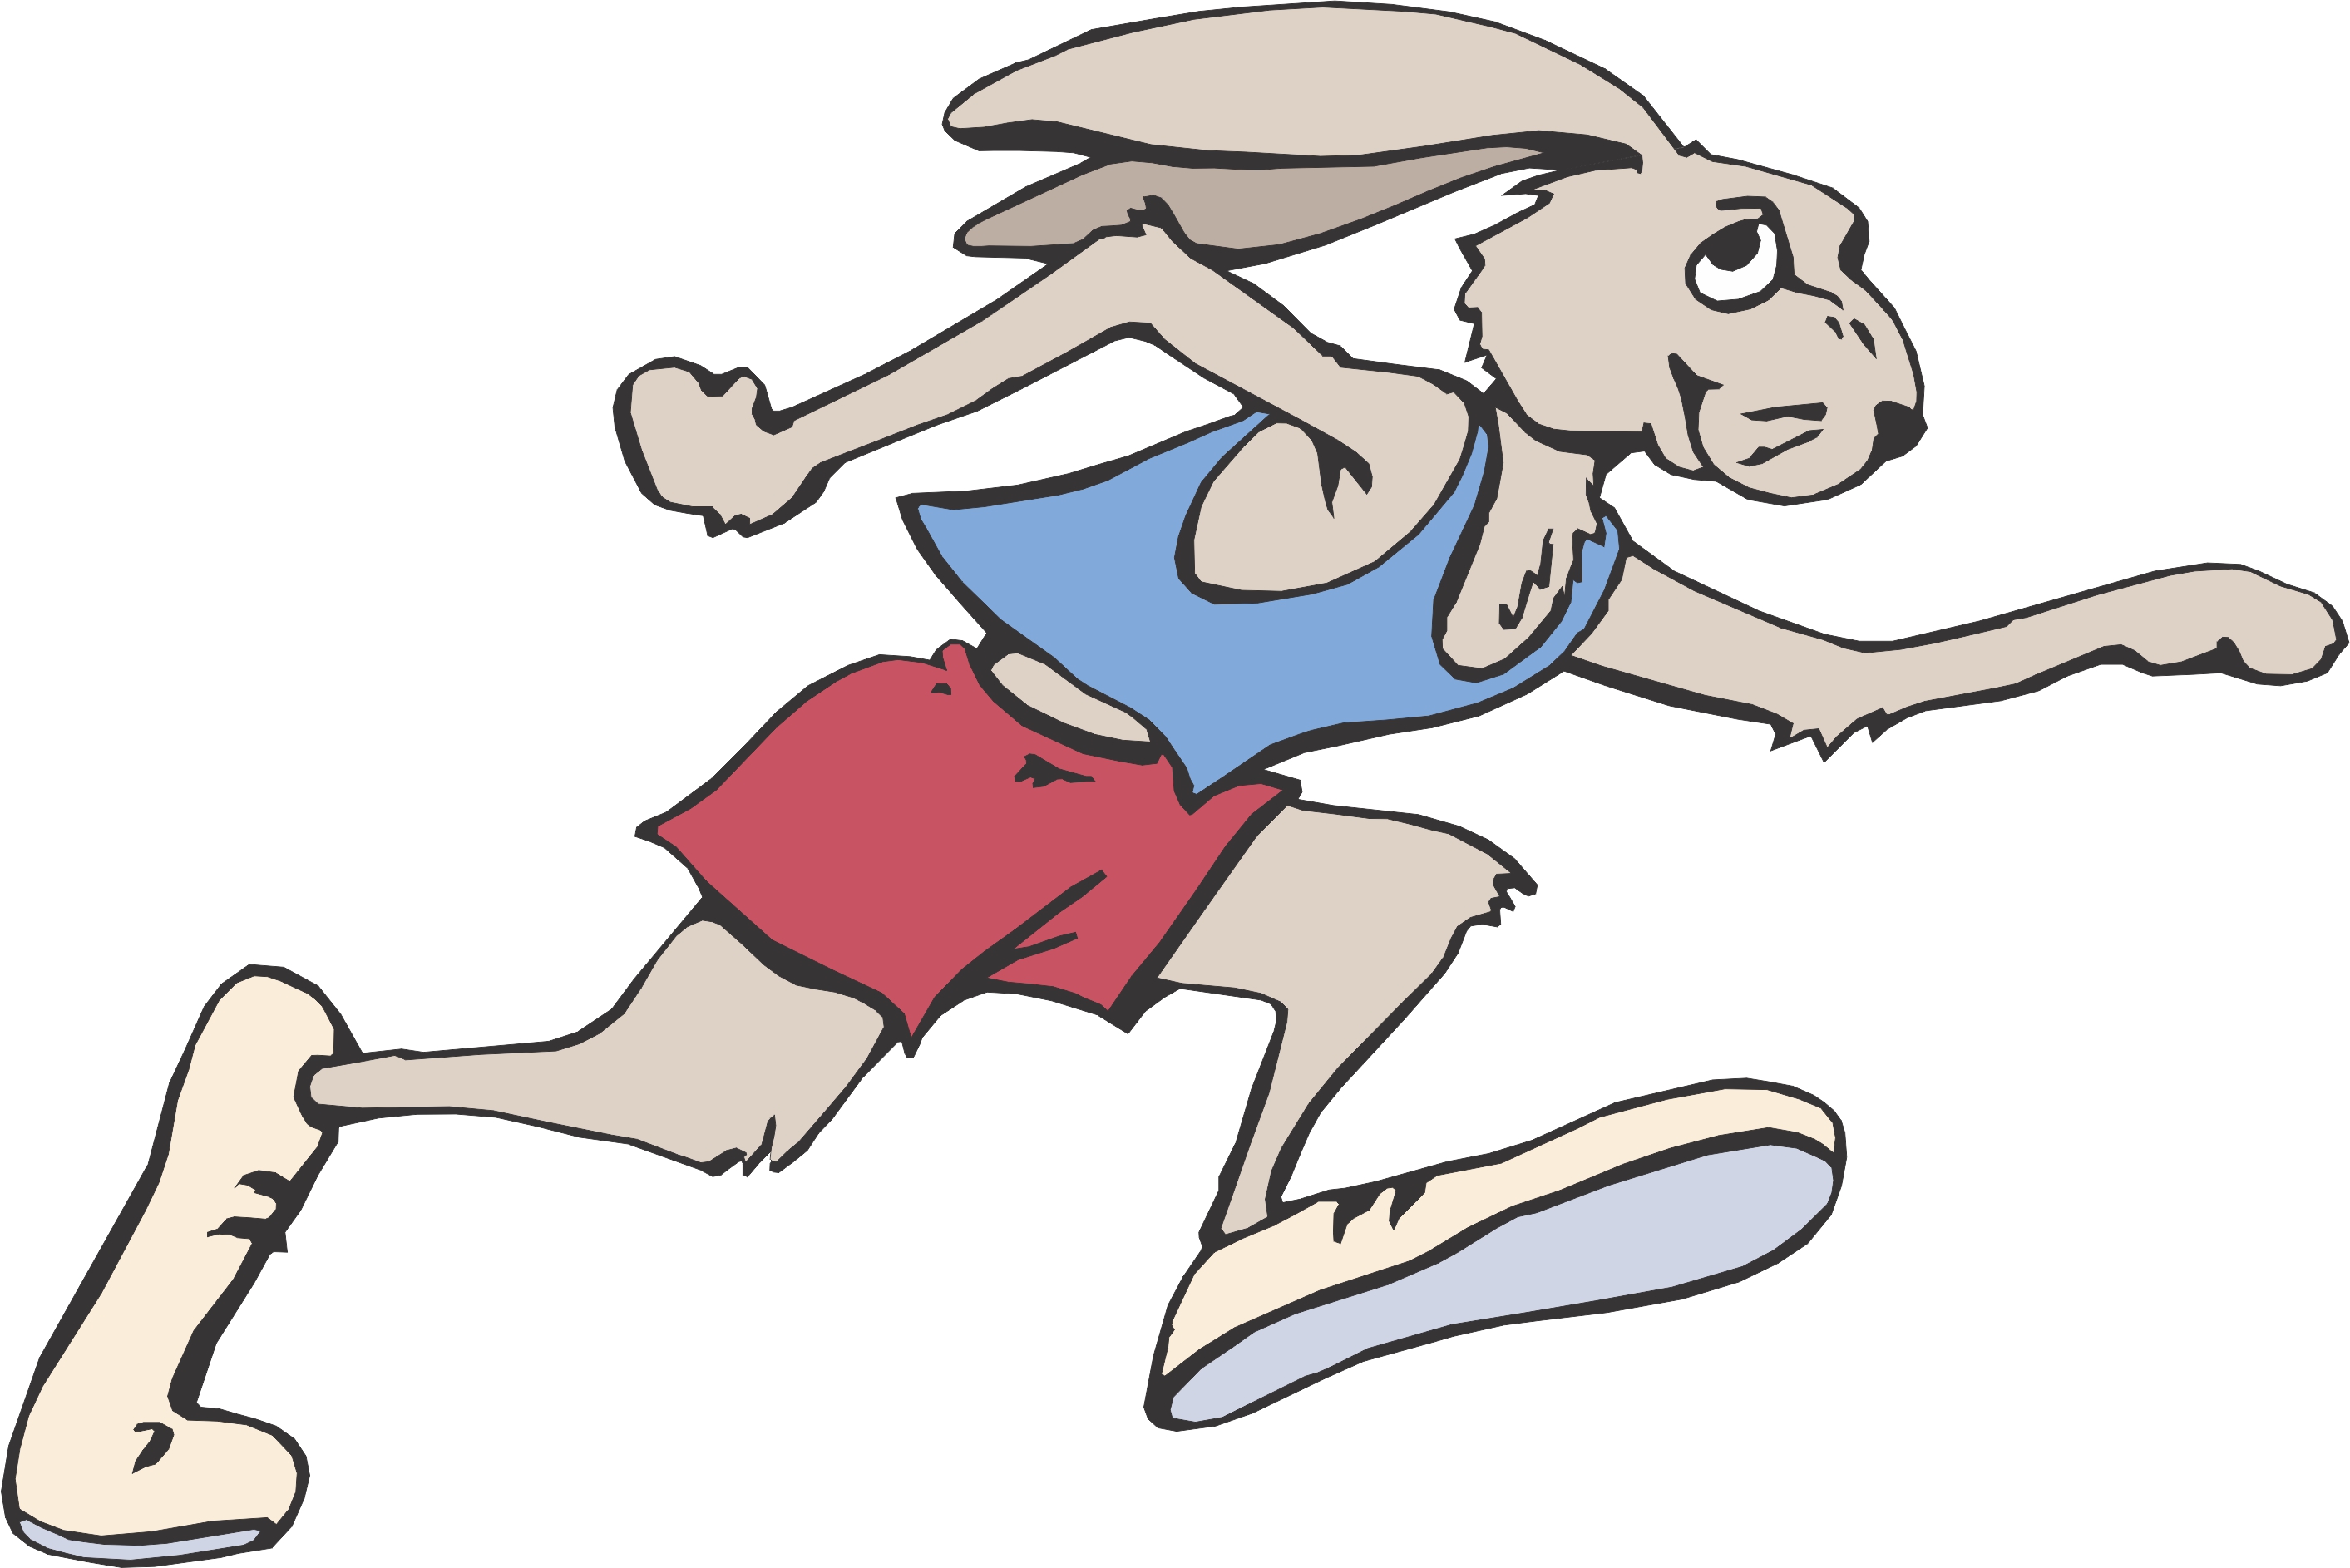 Running Bunny Clip Art - ClipArt Best